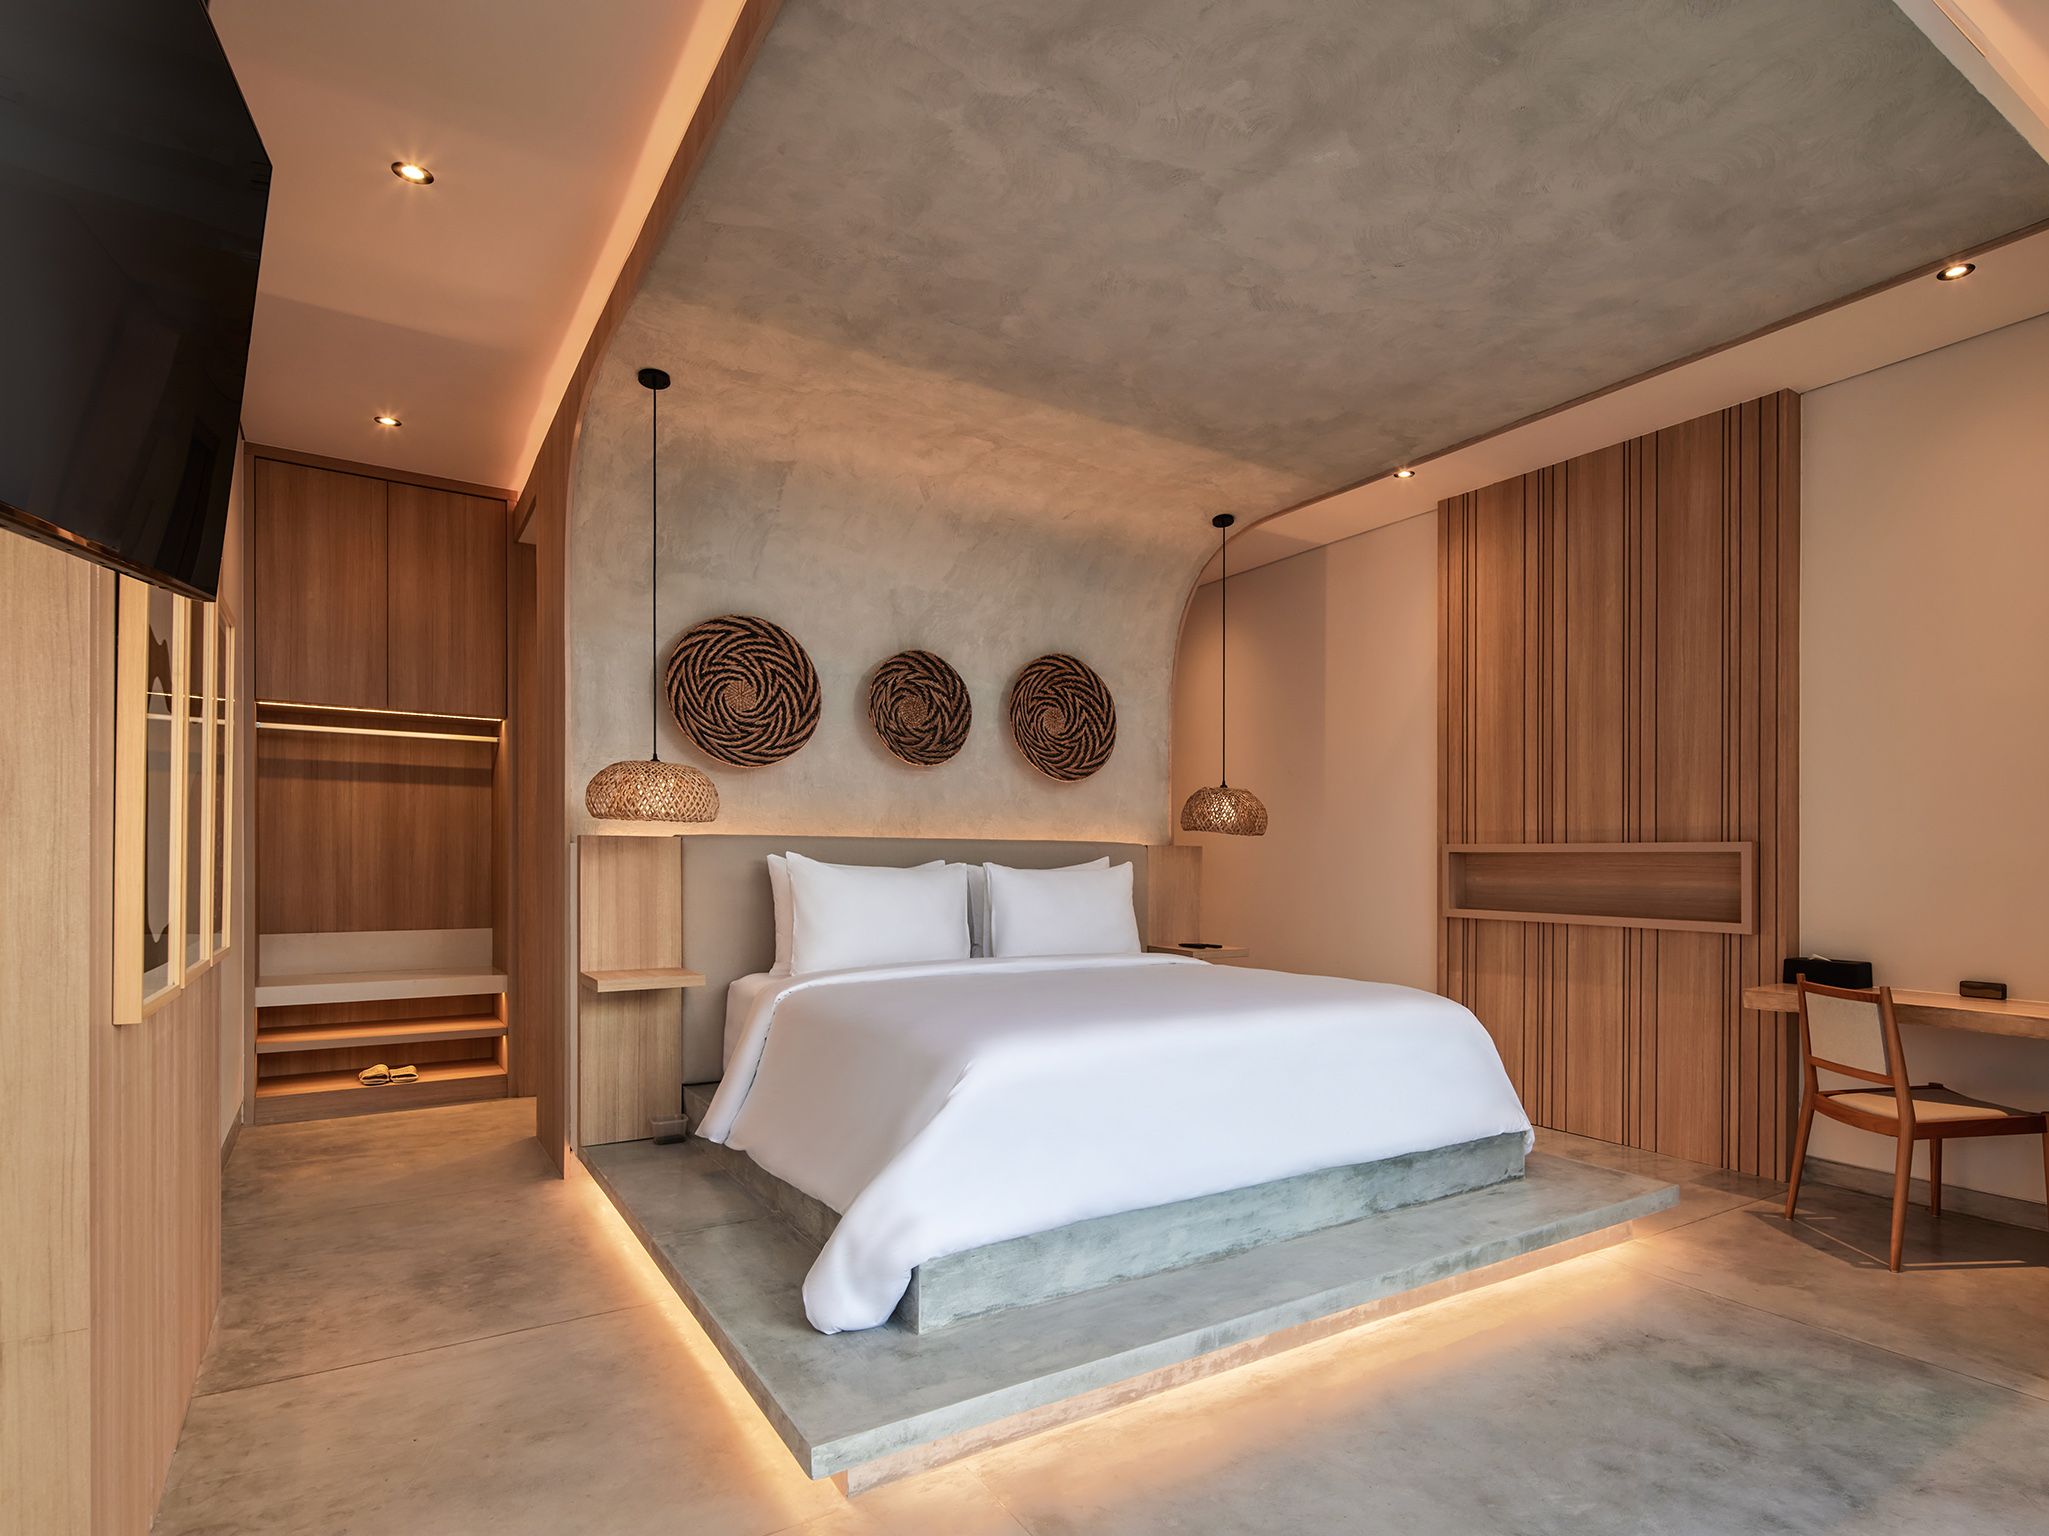 Villa Nini Elly - King bed and simplistic design